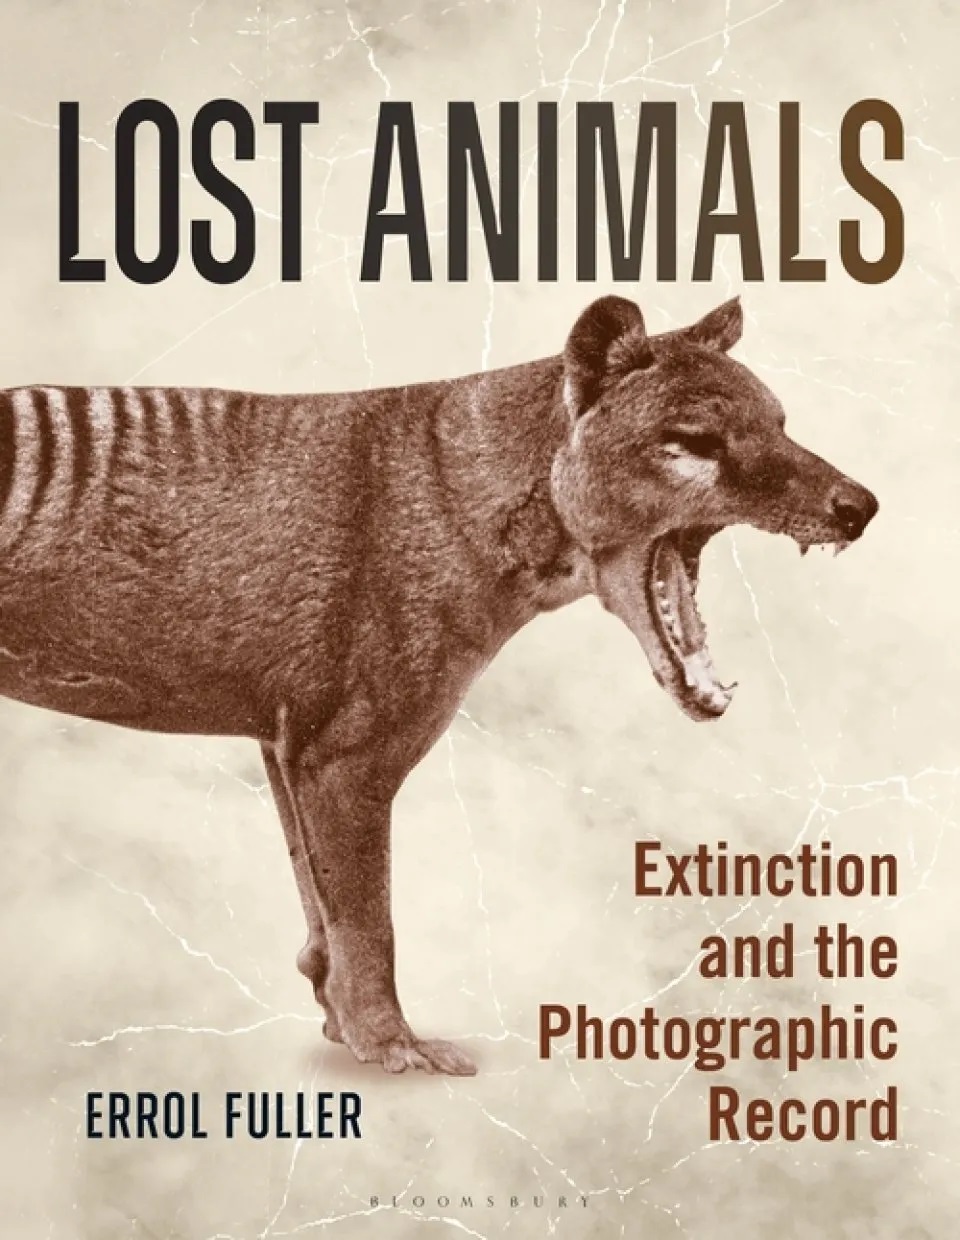 Lost the animals. Анимал лост. Объявление Lost animals. Лост животные. Extinct animals перевод.